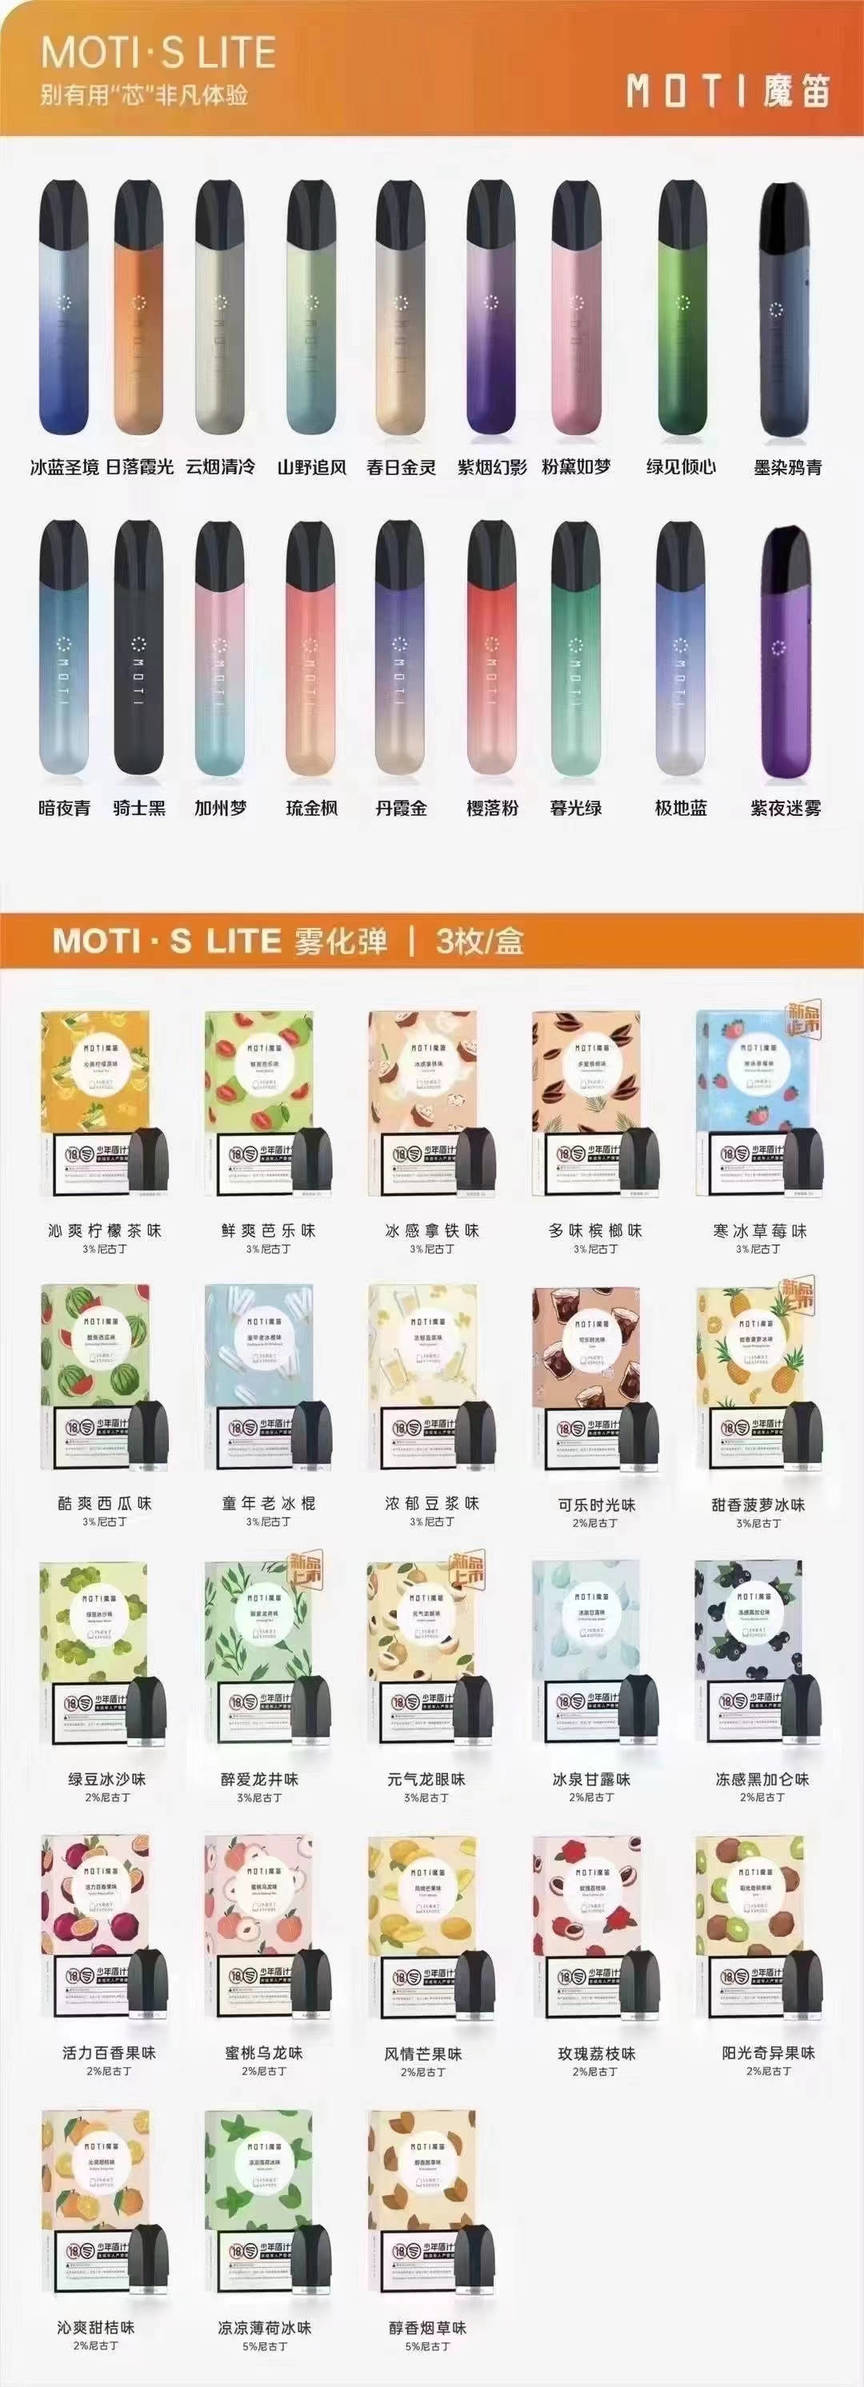 MOTI · S LITE魔笛二代产品价格：16种颜色 25个烟弹口味